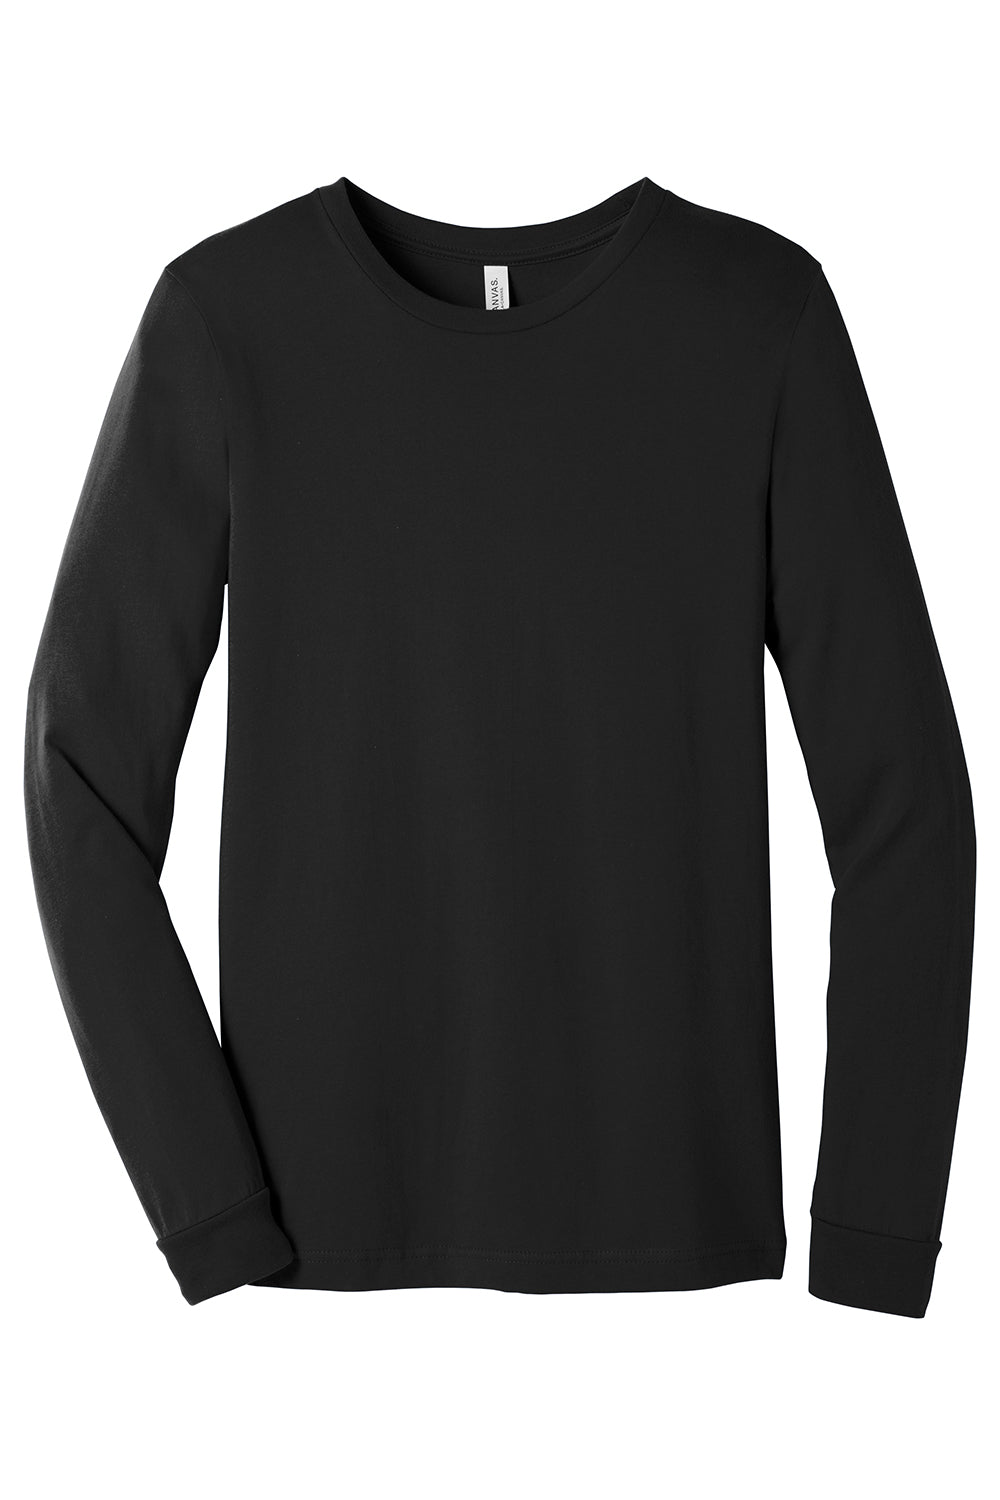 Bella + Canvas BC3501/3501 Mens Jersey Long Sleeve Crewneck T-Shirt Black Flat Front